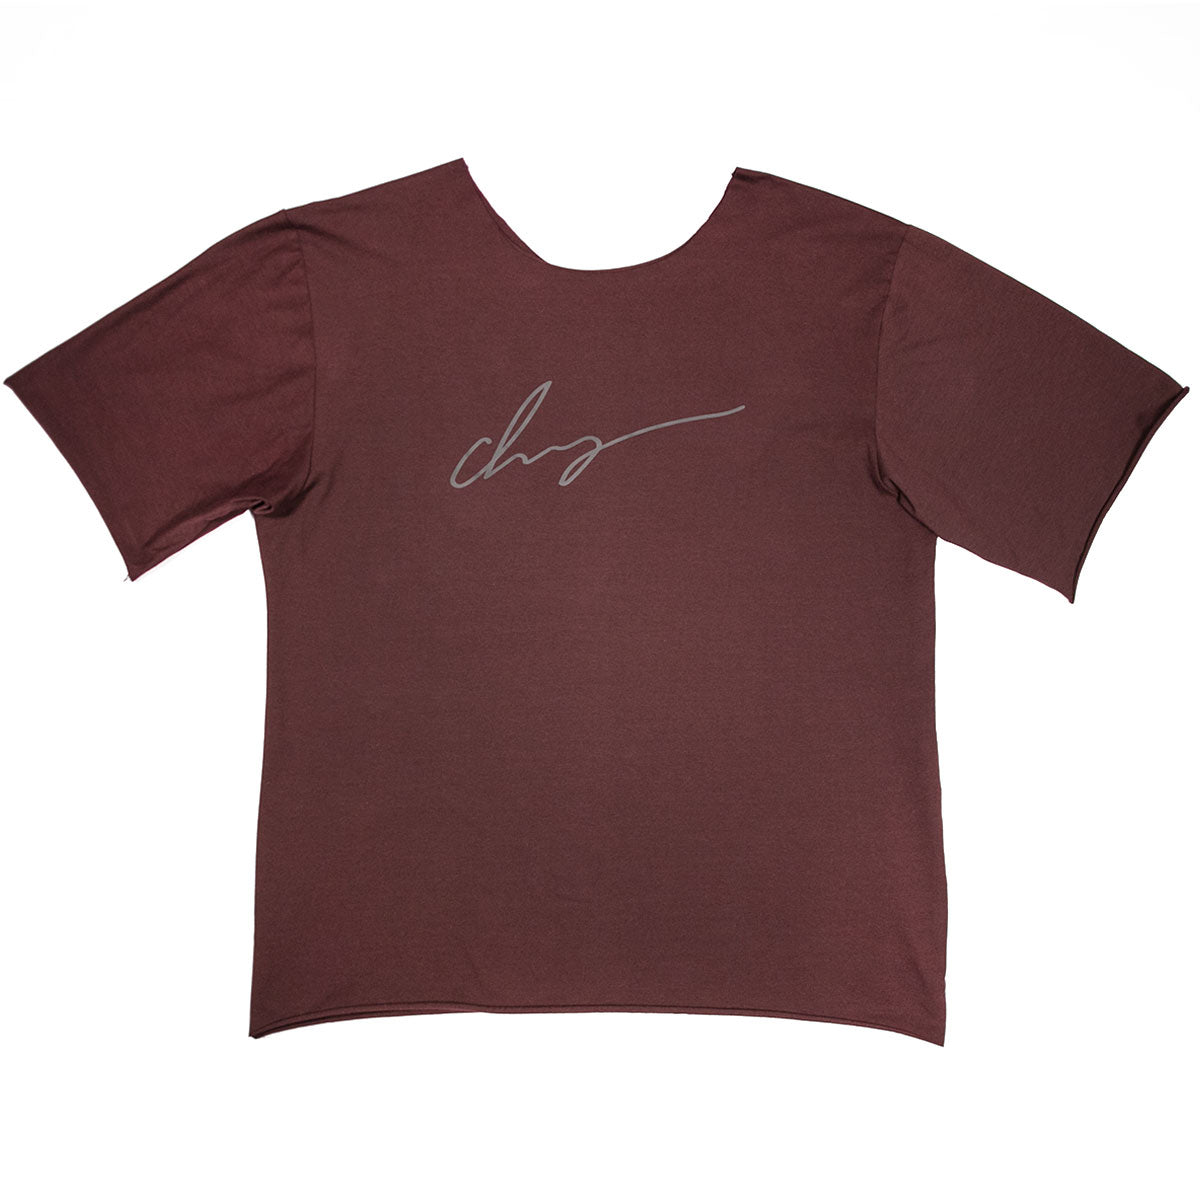 Signature burgundy shirt